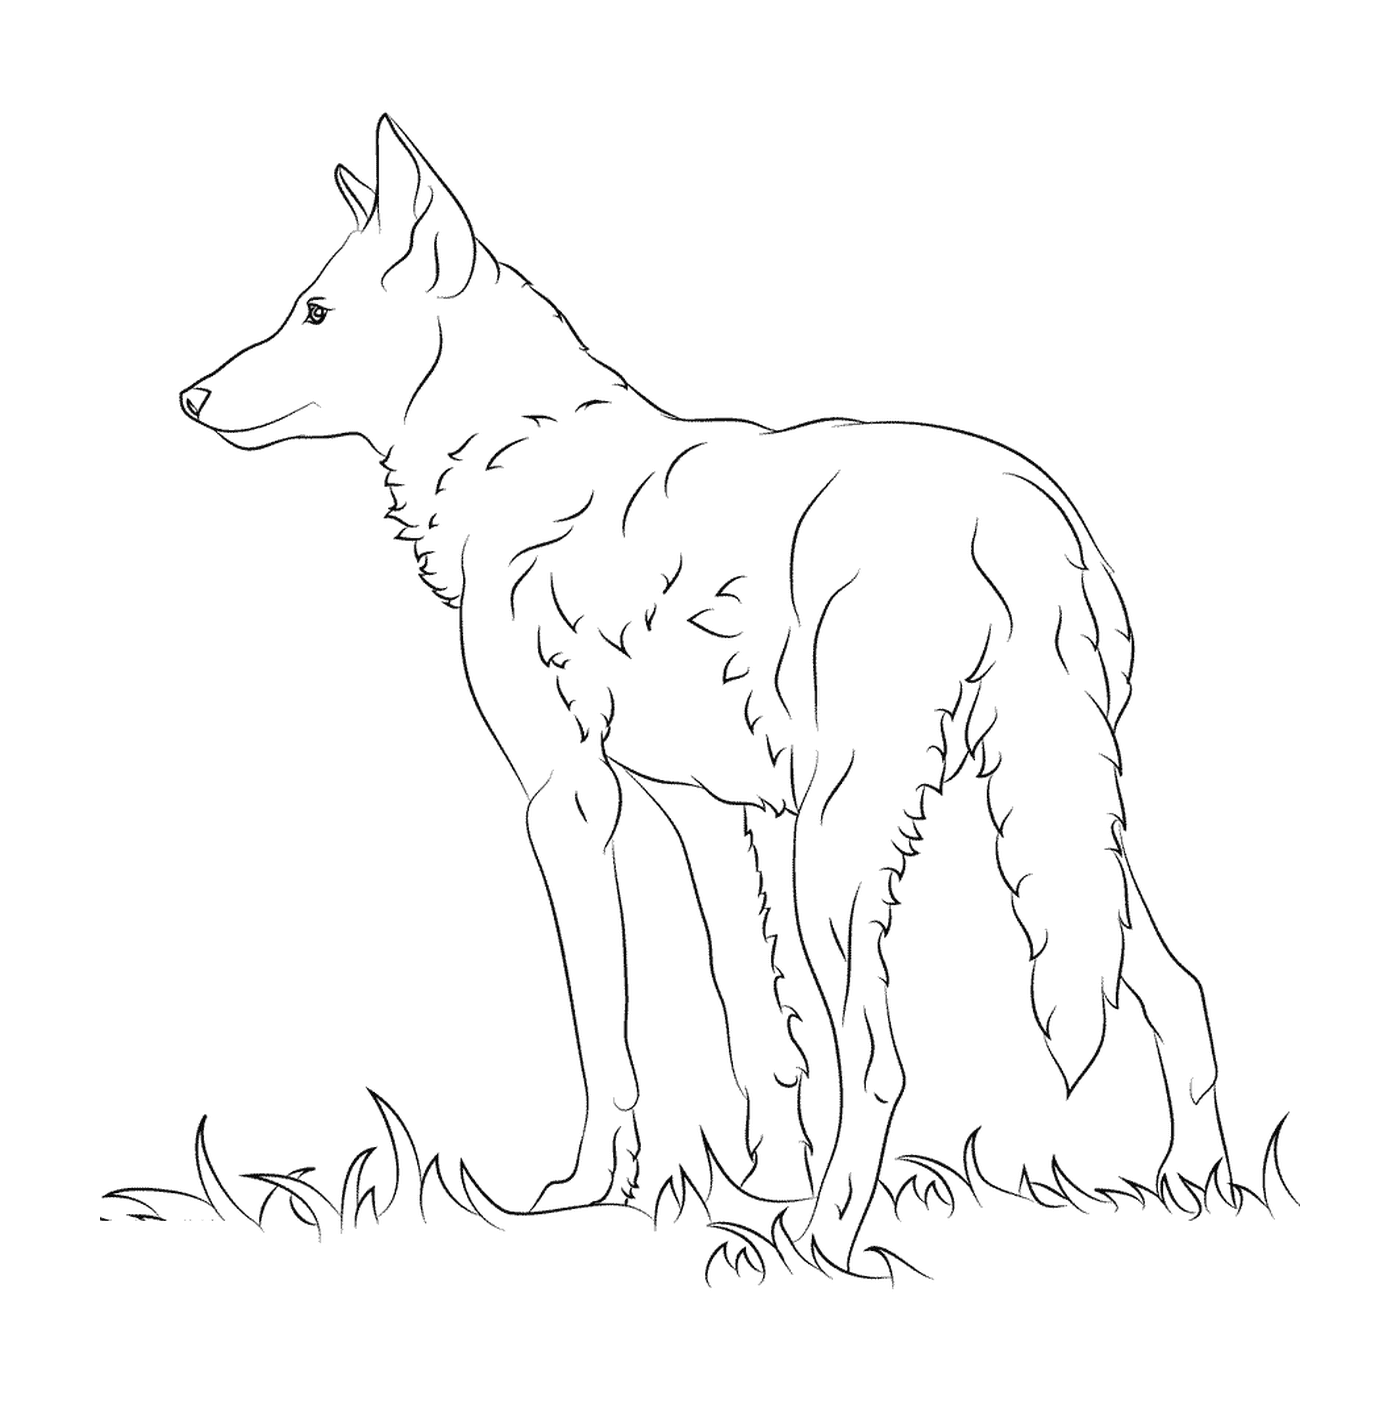  Hund auf einem Feld 